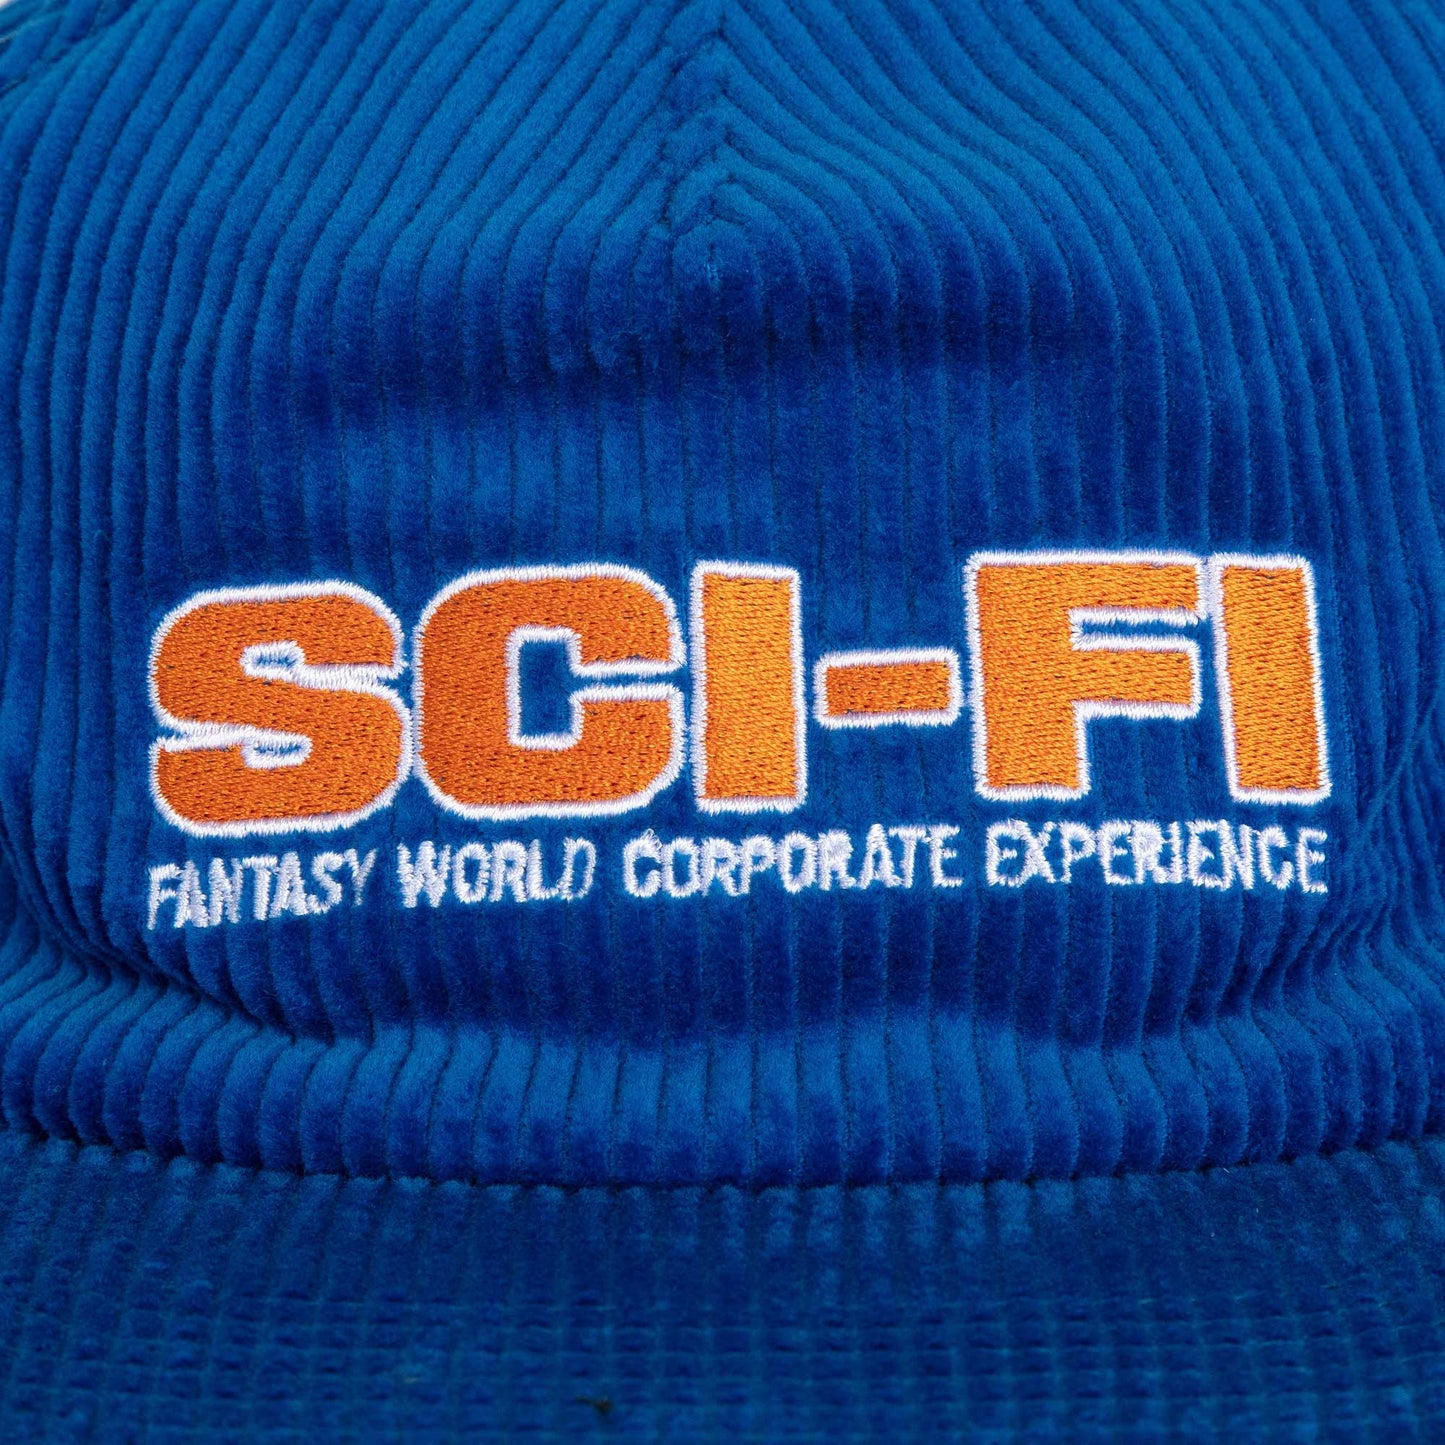 Sci-Fi-Fantasy Corporate Experience Hat, blue - Tiki Room Skateboards - 2